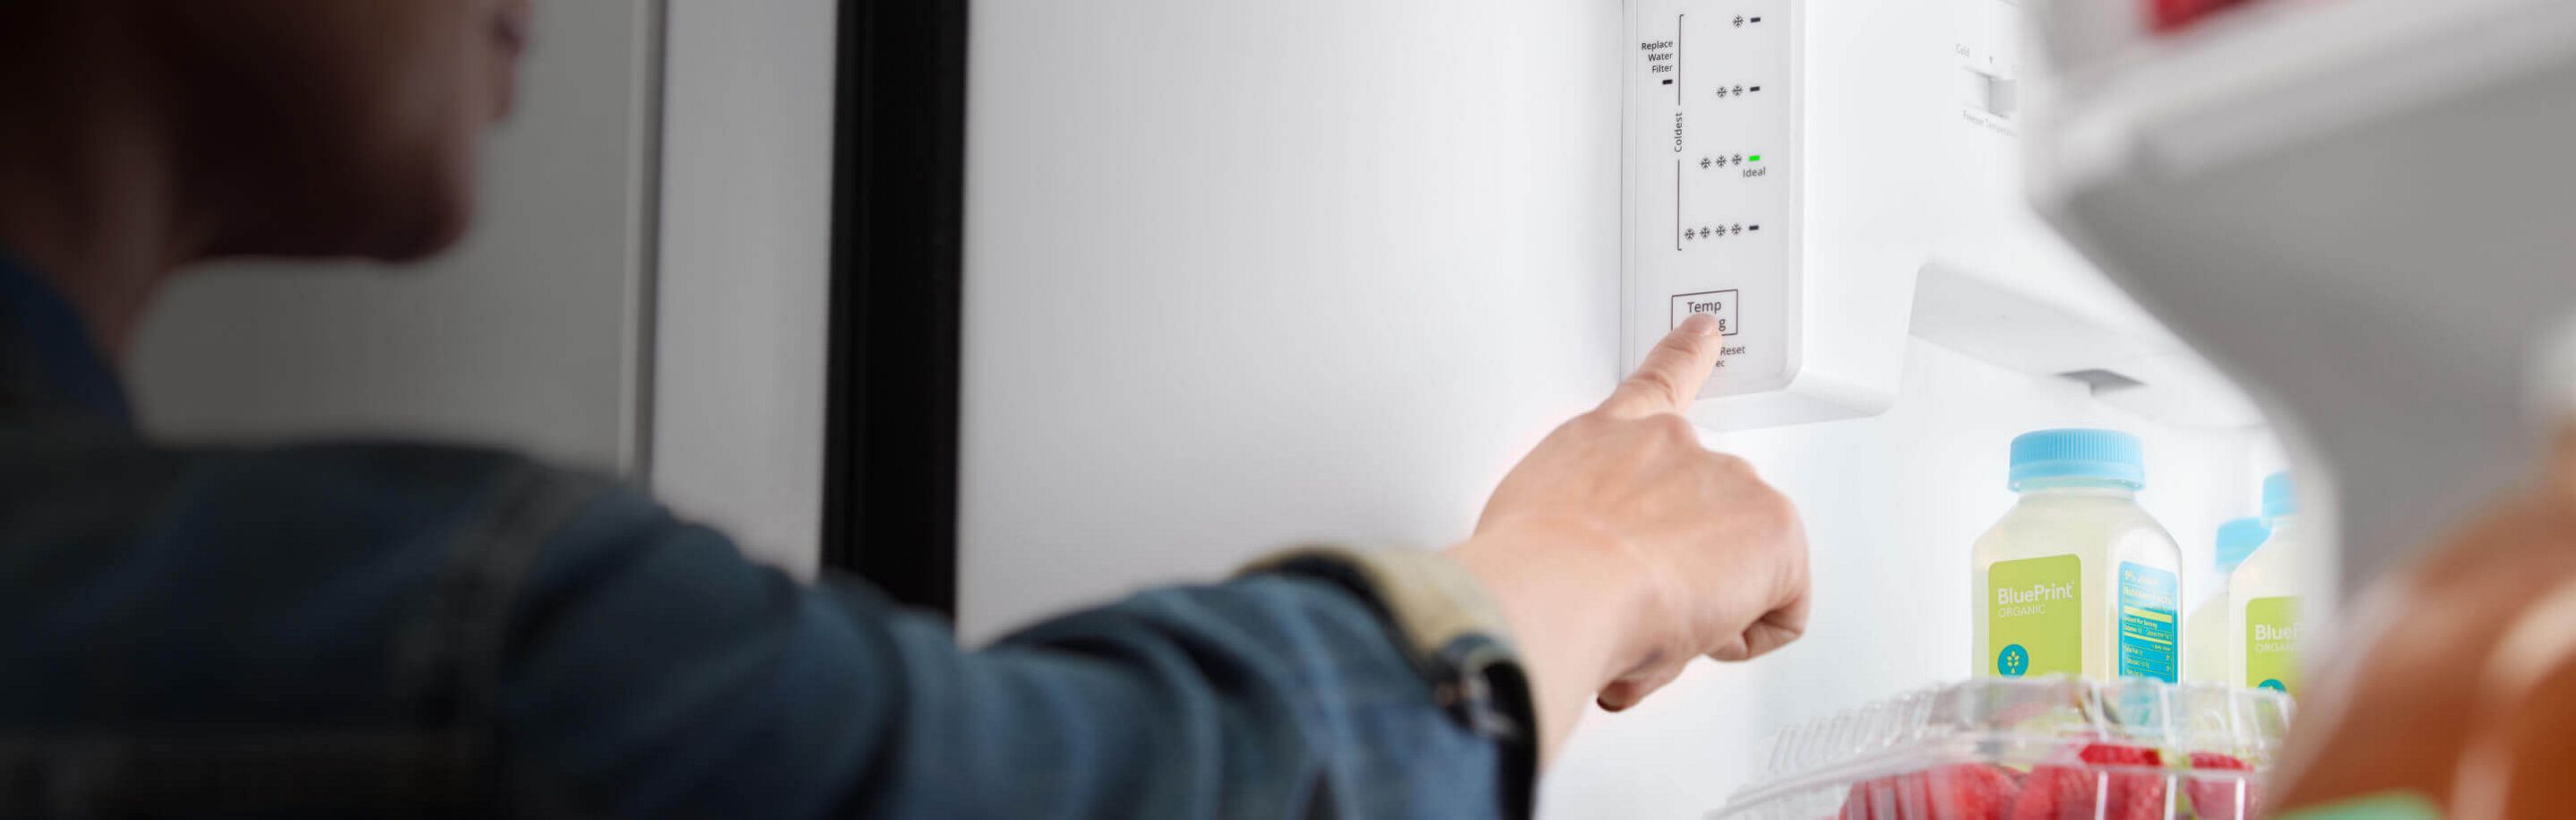 Person adjusting refrigerator temperature